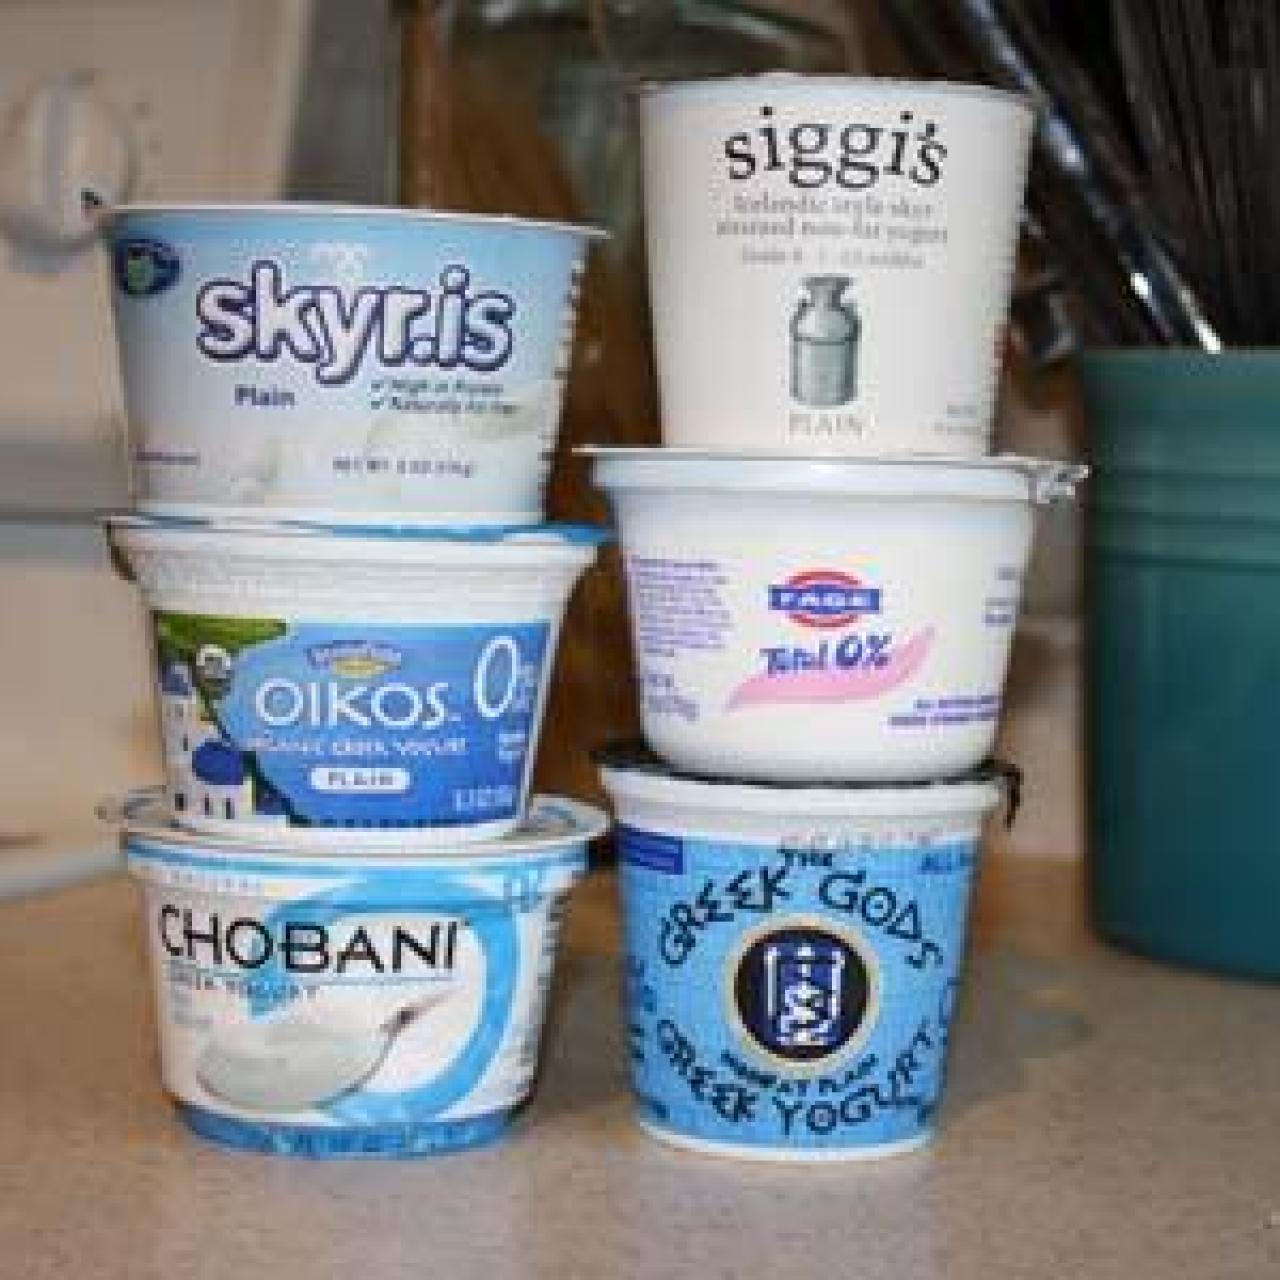 Great Value (Walmart) Plain Whole Milk Greek Yogurt Yogurt Review